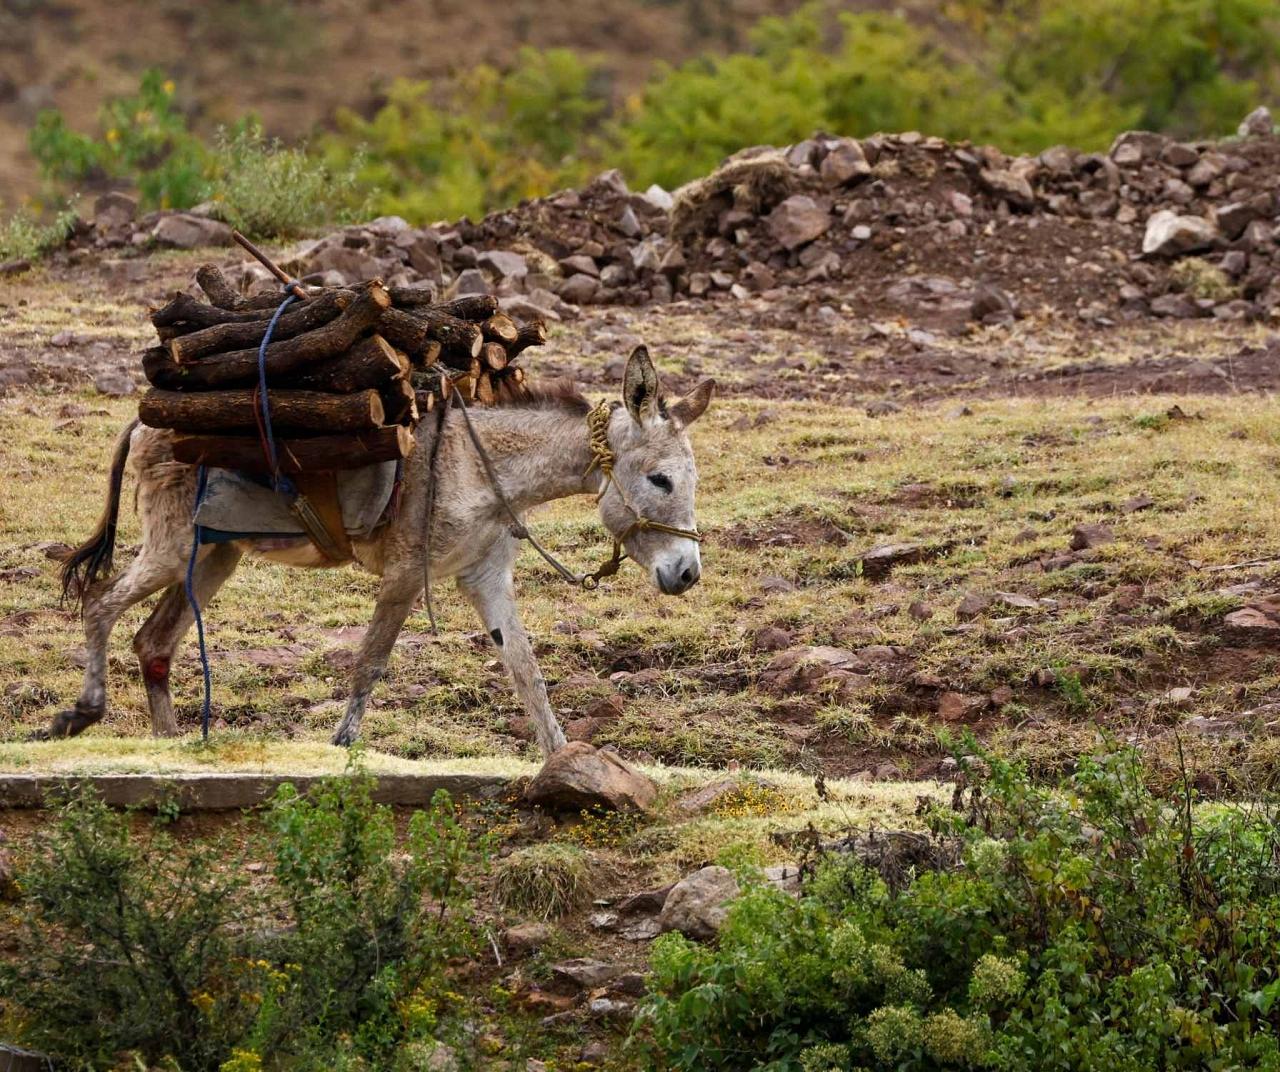 Donkey, Mexico nature tour, Naturalist Journeys, Guided Nature Tour, Oaxaca travel